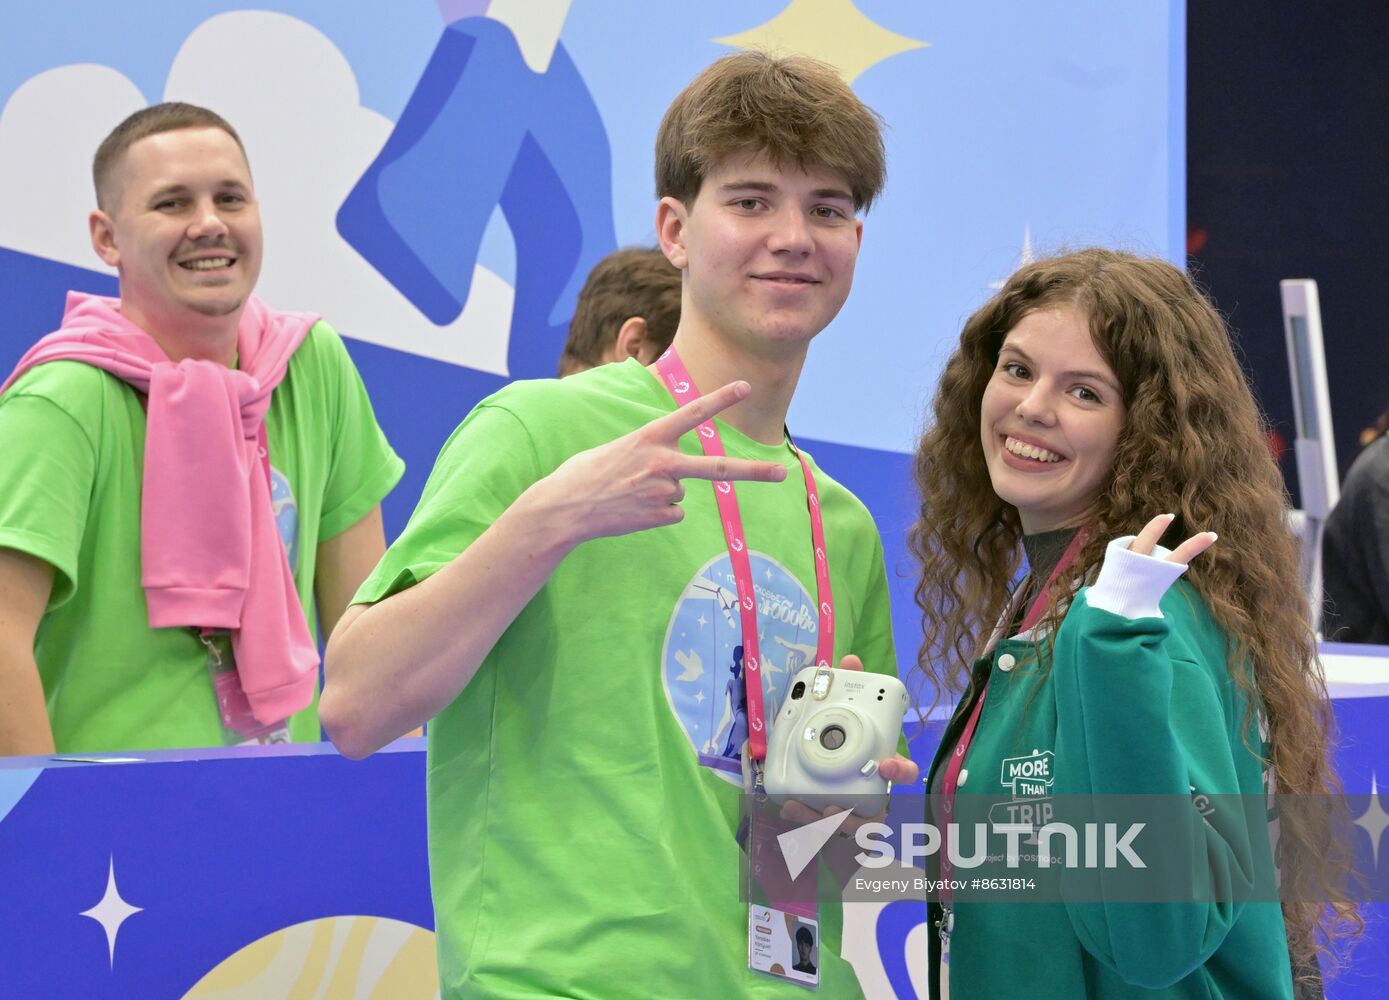 The World Youth Festival in Sochi